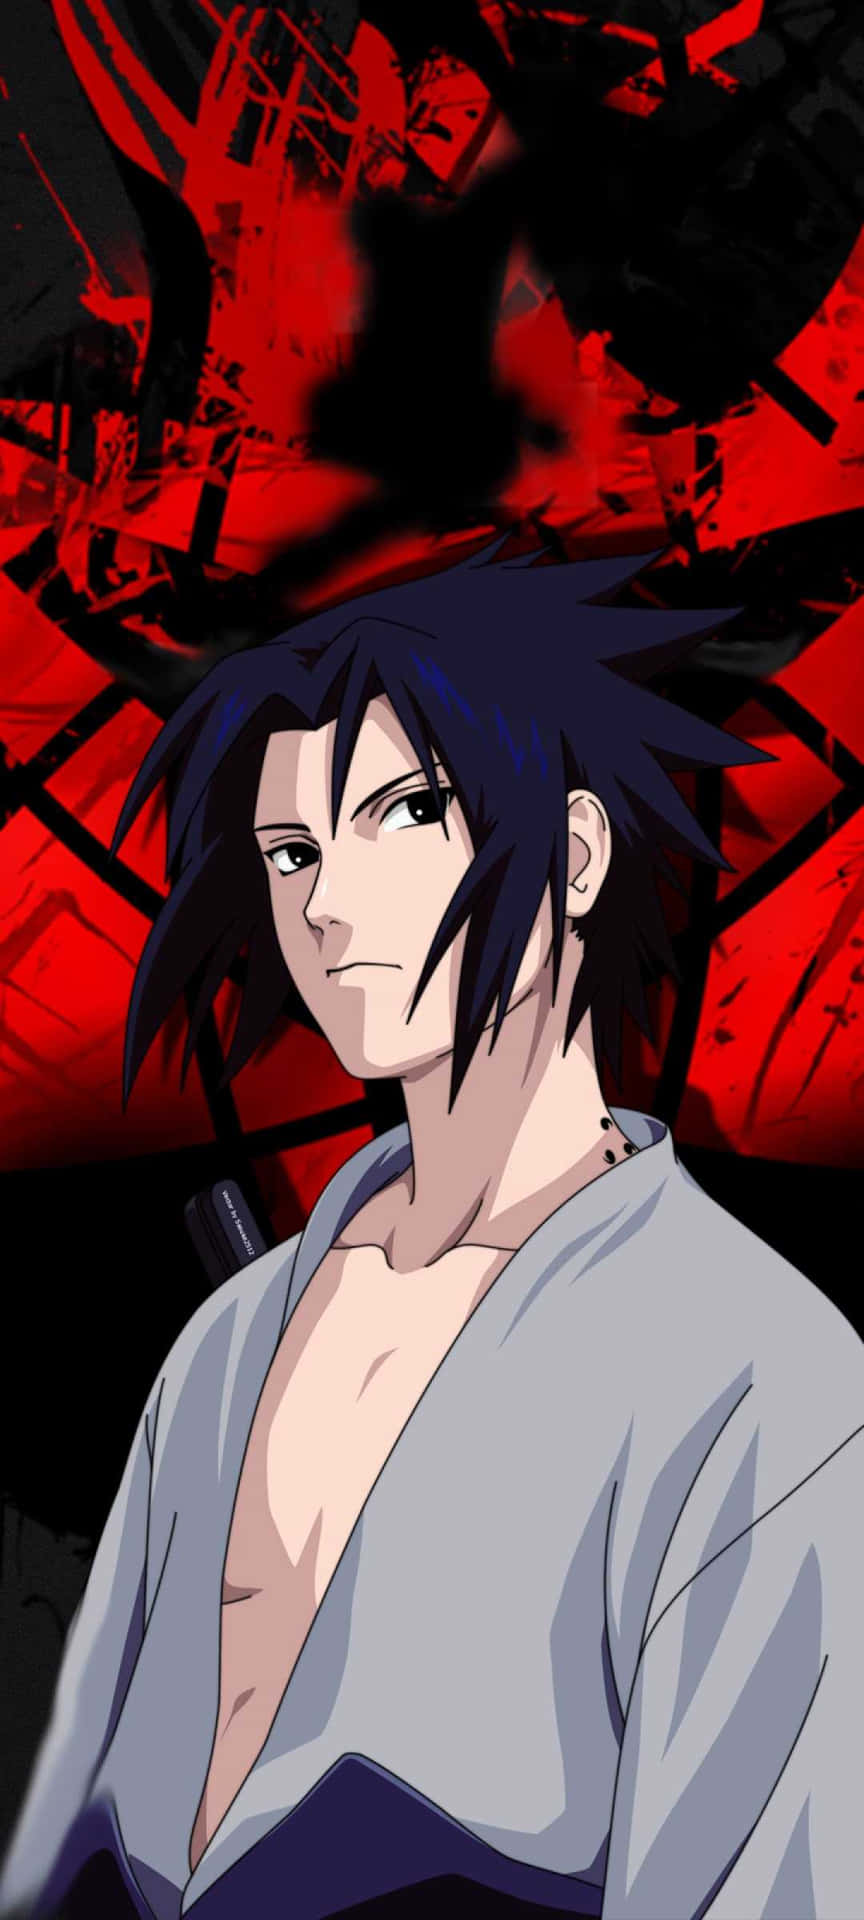 “Discover the Untold Adventures of Sasuke”